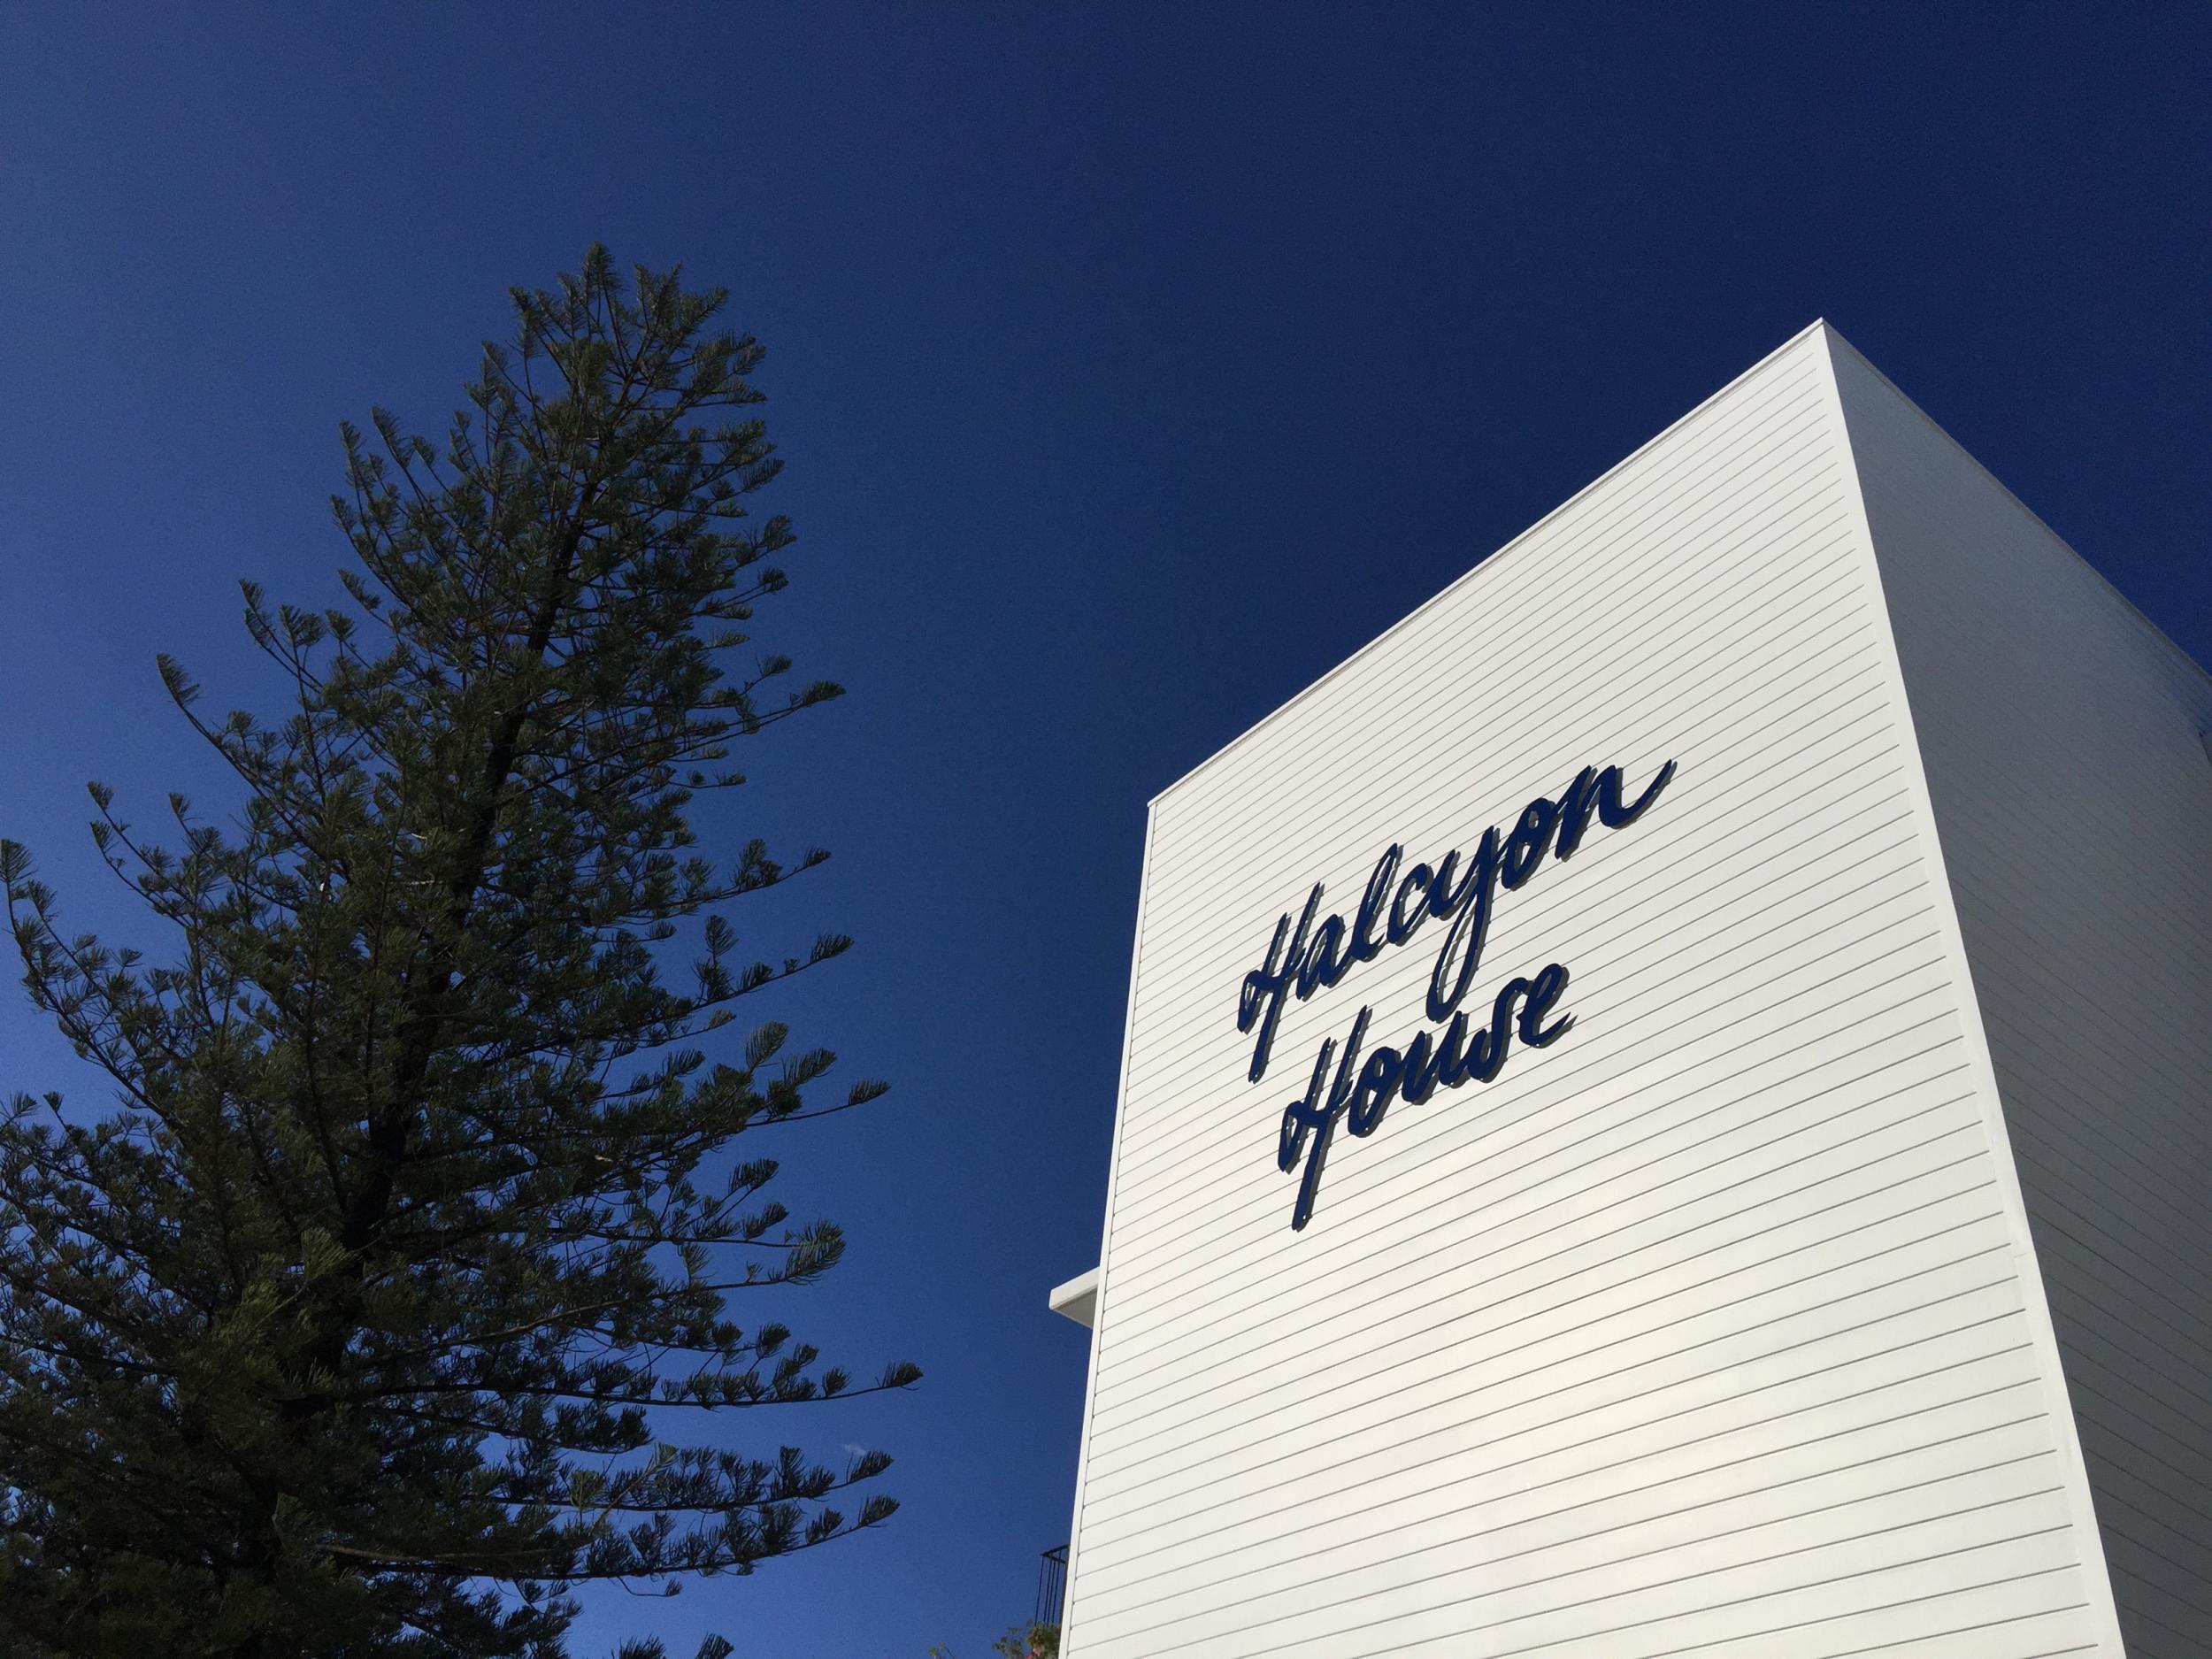 The Australian winter sky matches the decor inside Halcyon House on Byron Bay